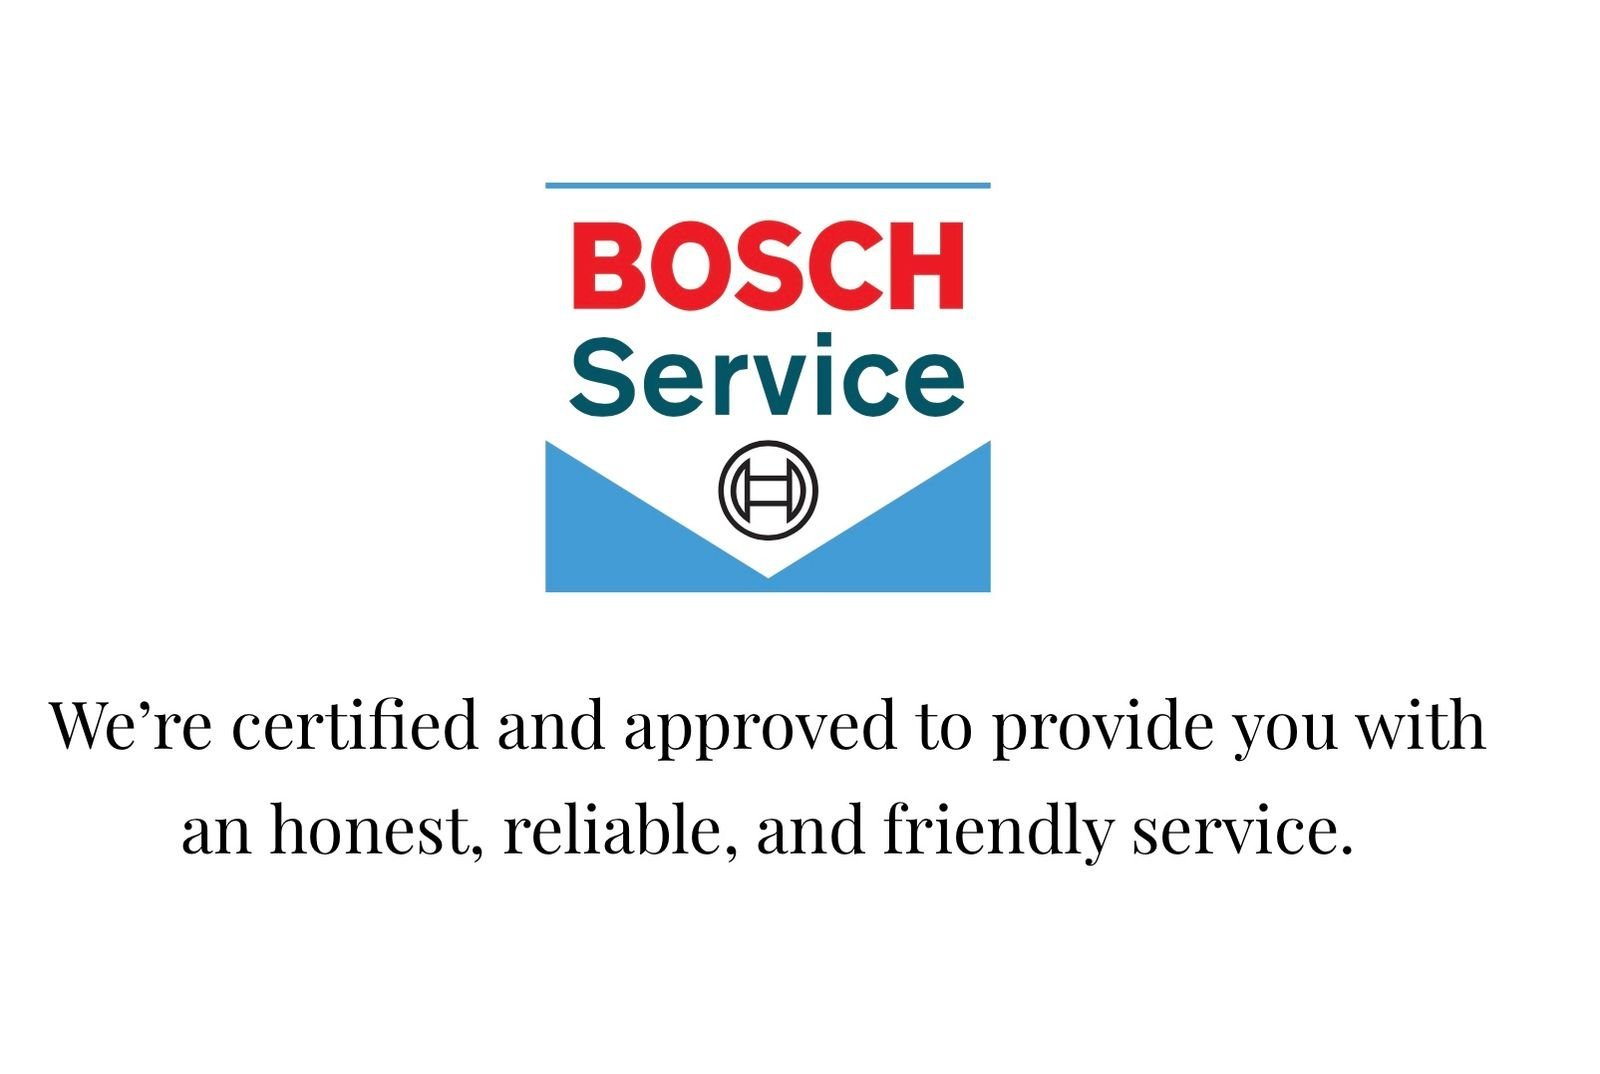 Get the Best Car & Motor Services at BS Motors Sandy Bedfordshire | Bosch Service Garage 